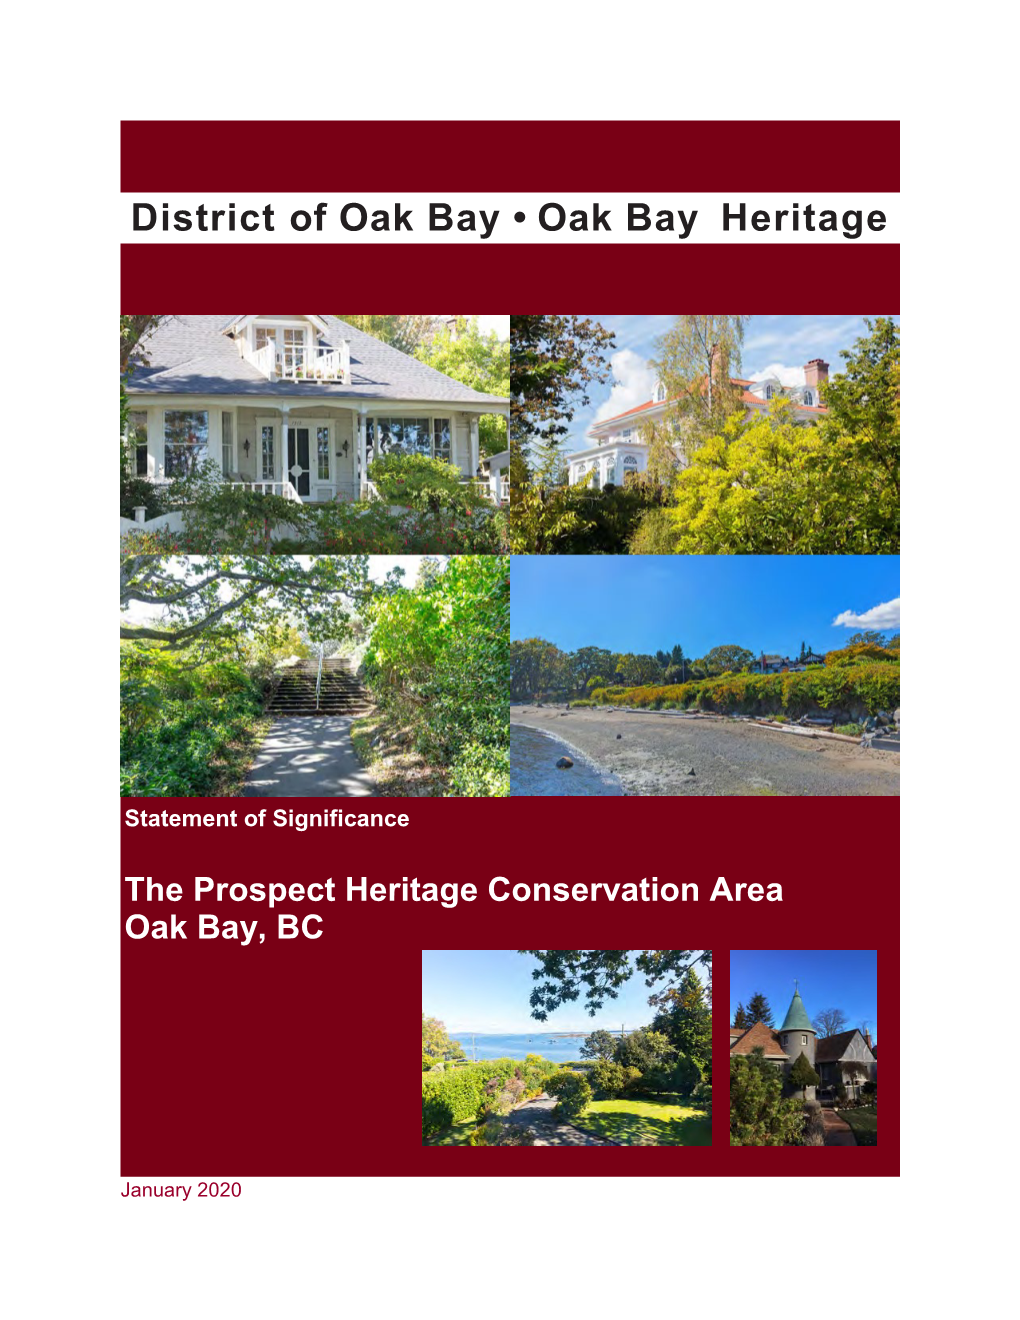 The Prospect Heritage Conservation Area Oak Bay, BC